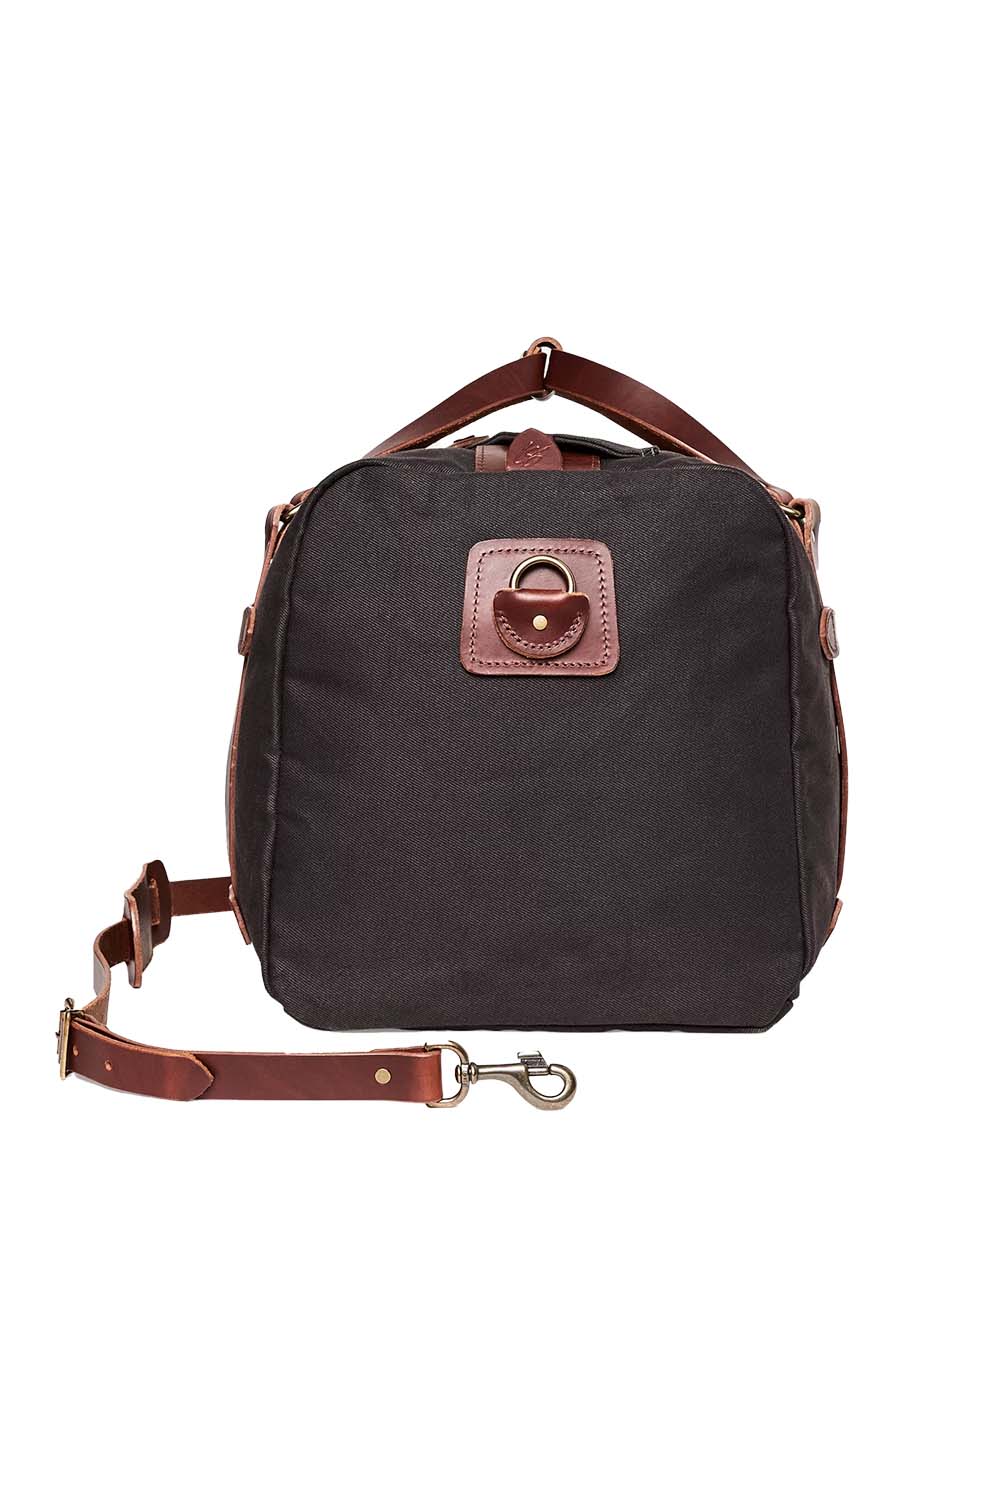 Filson - Traveller Medium Duffle Bag - Cinder - Side